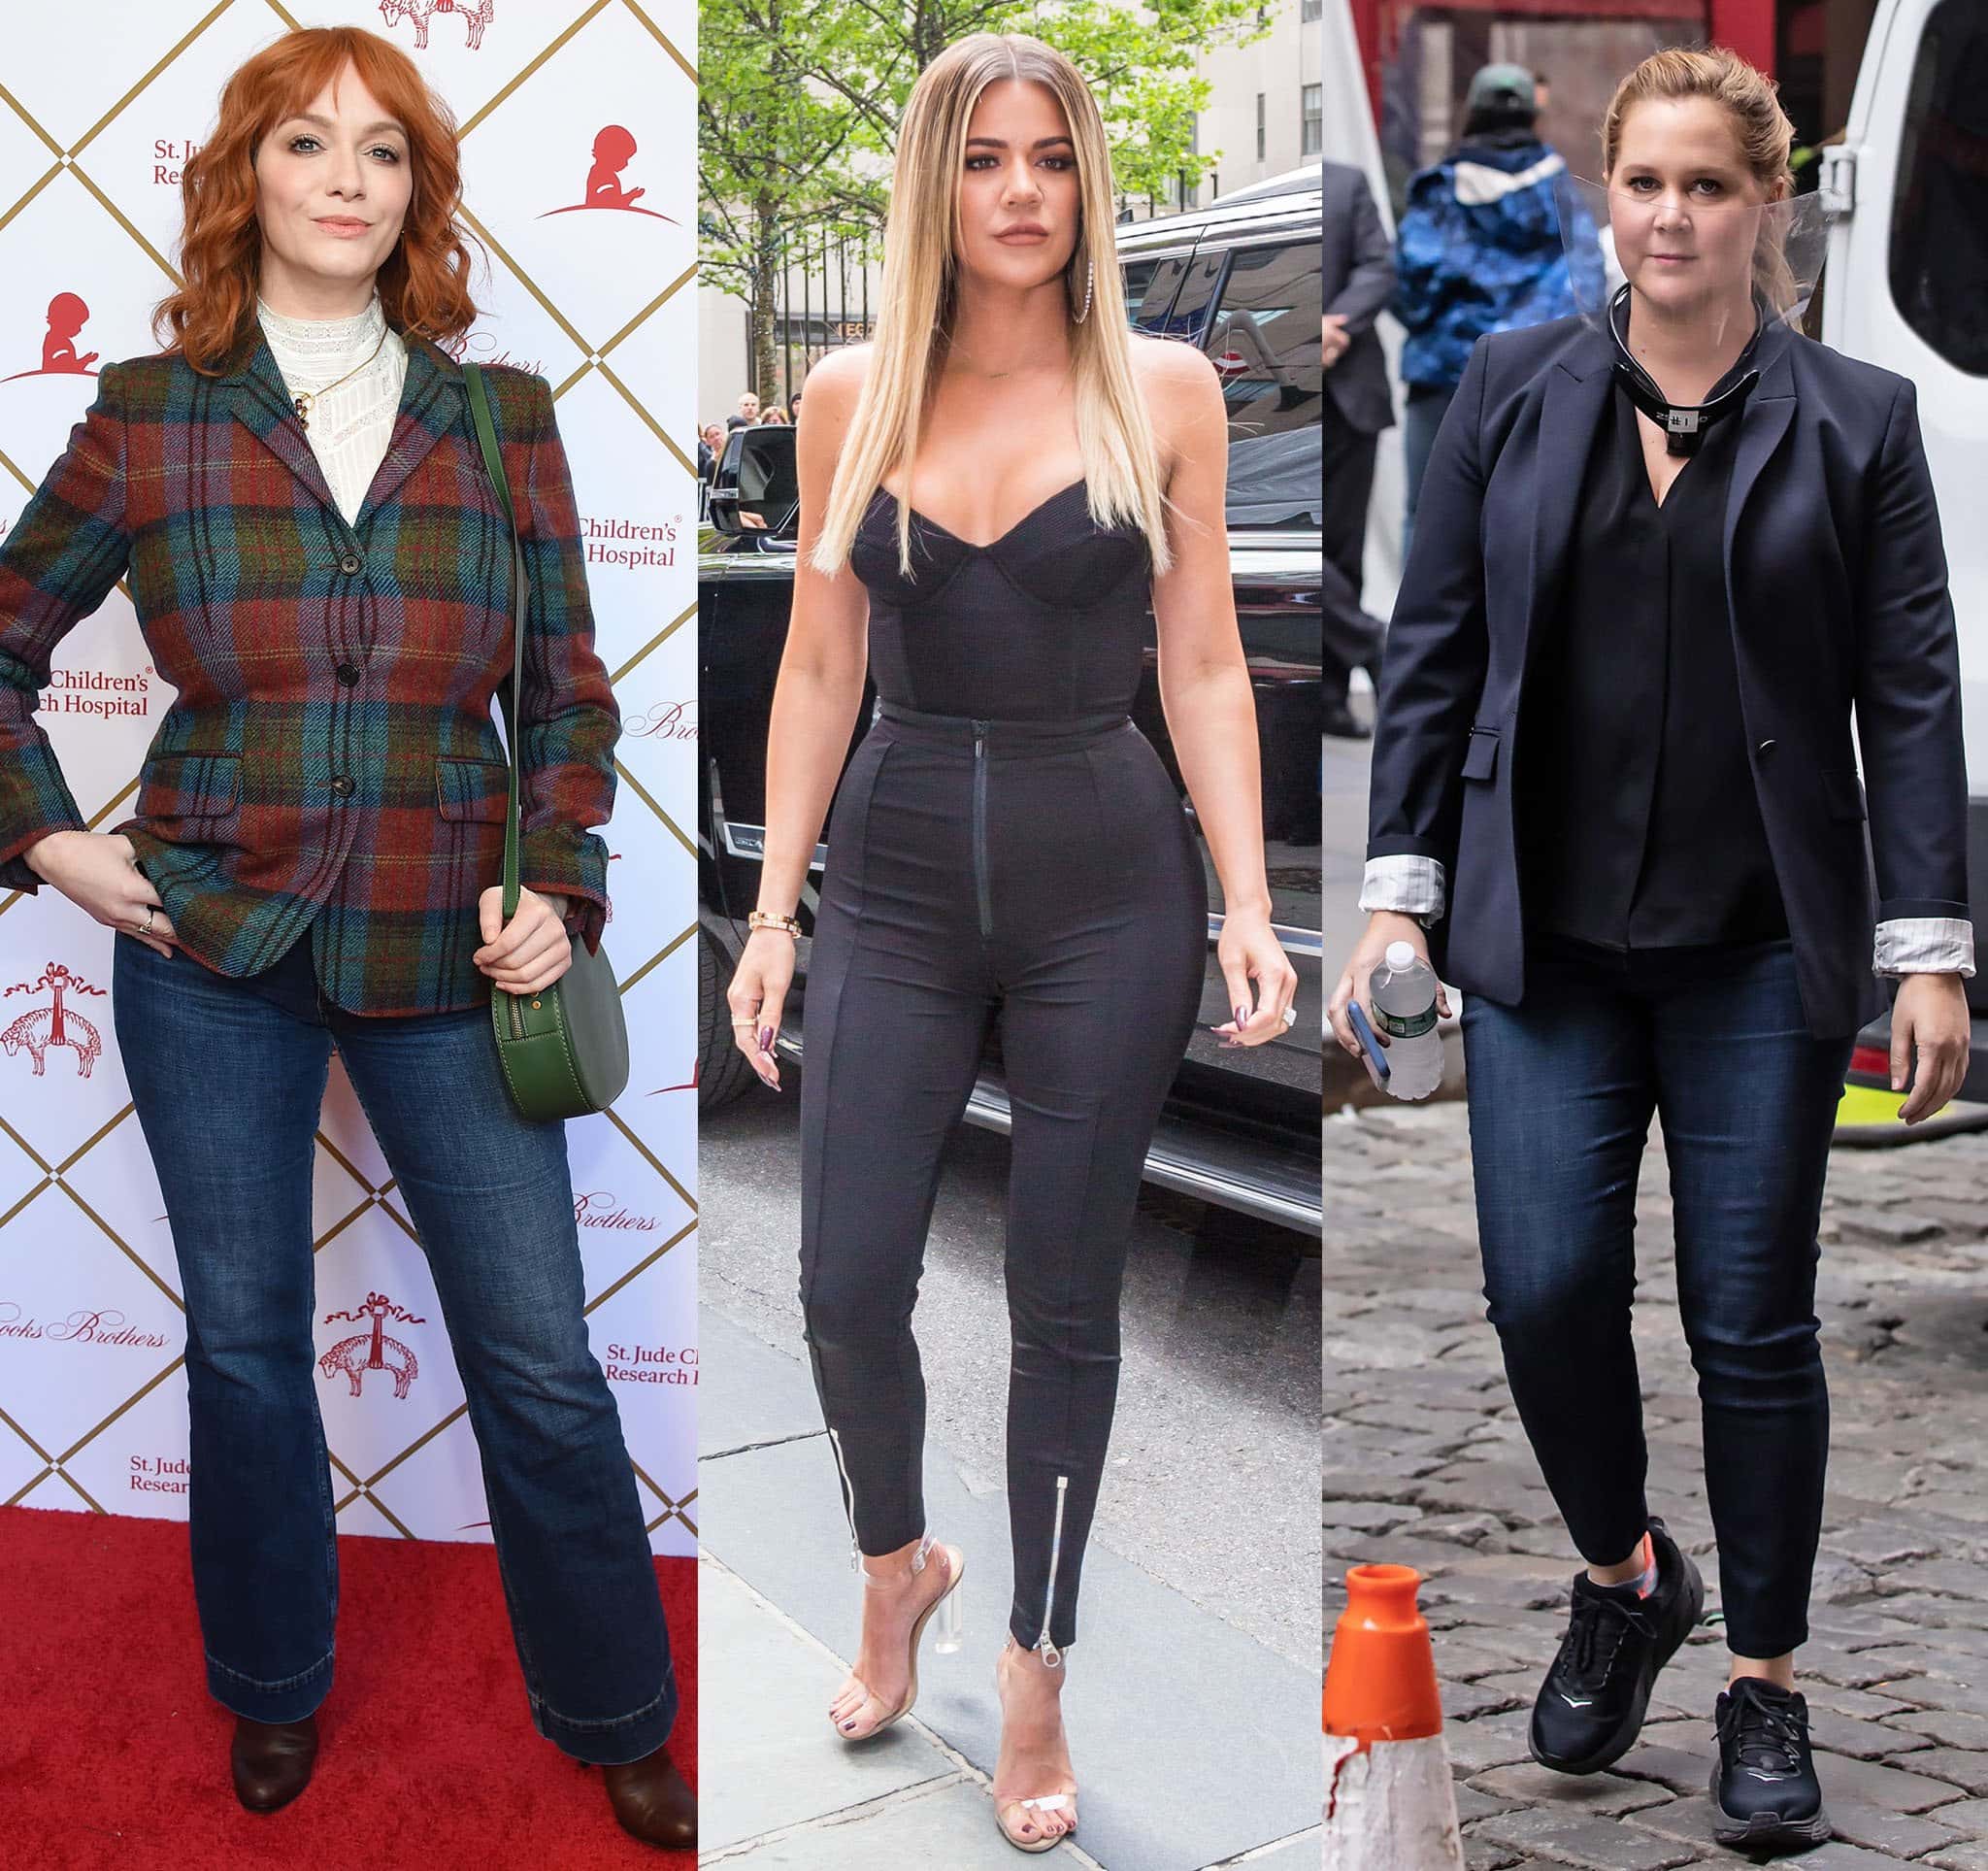 Christina Hendricks, Khloe Kardashian, and Amy Schumer illustrate stylish jeans options for plus-size figures